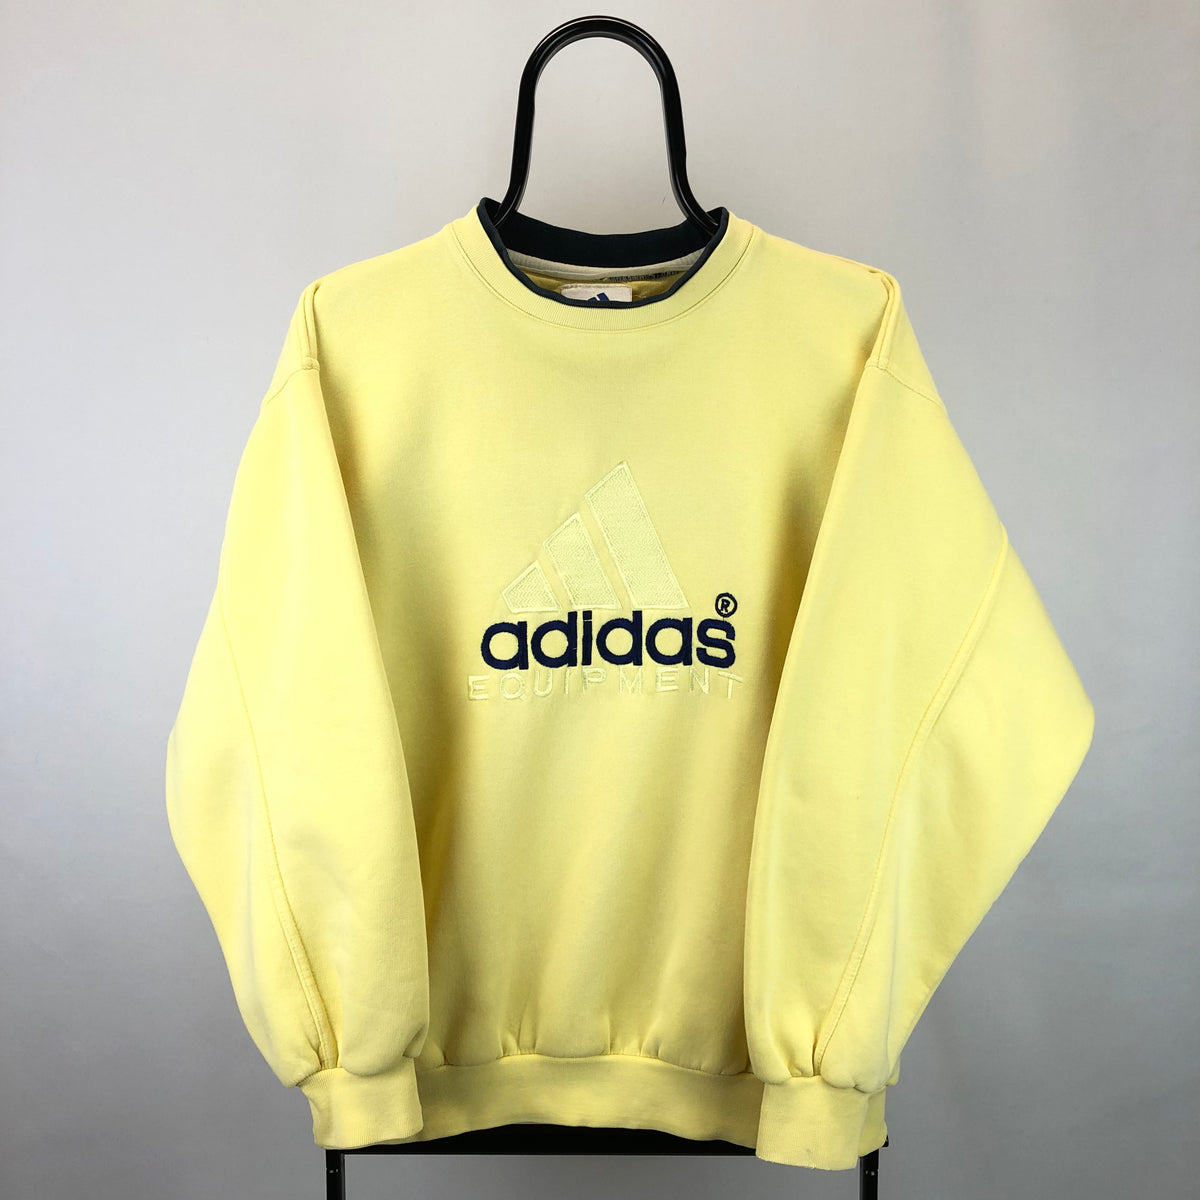 Vintage 90s Adidas Equipment Sweatshirt in - Men's Medium/Women - Vintique